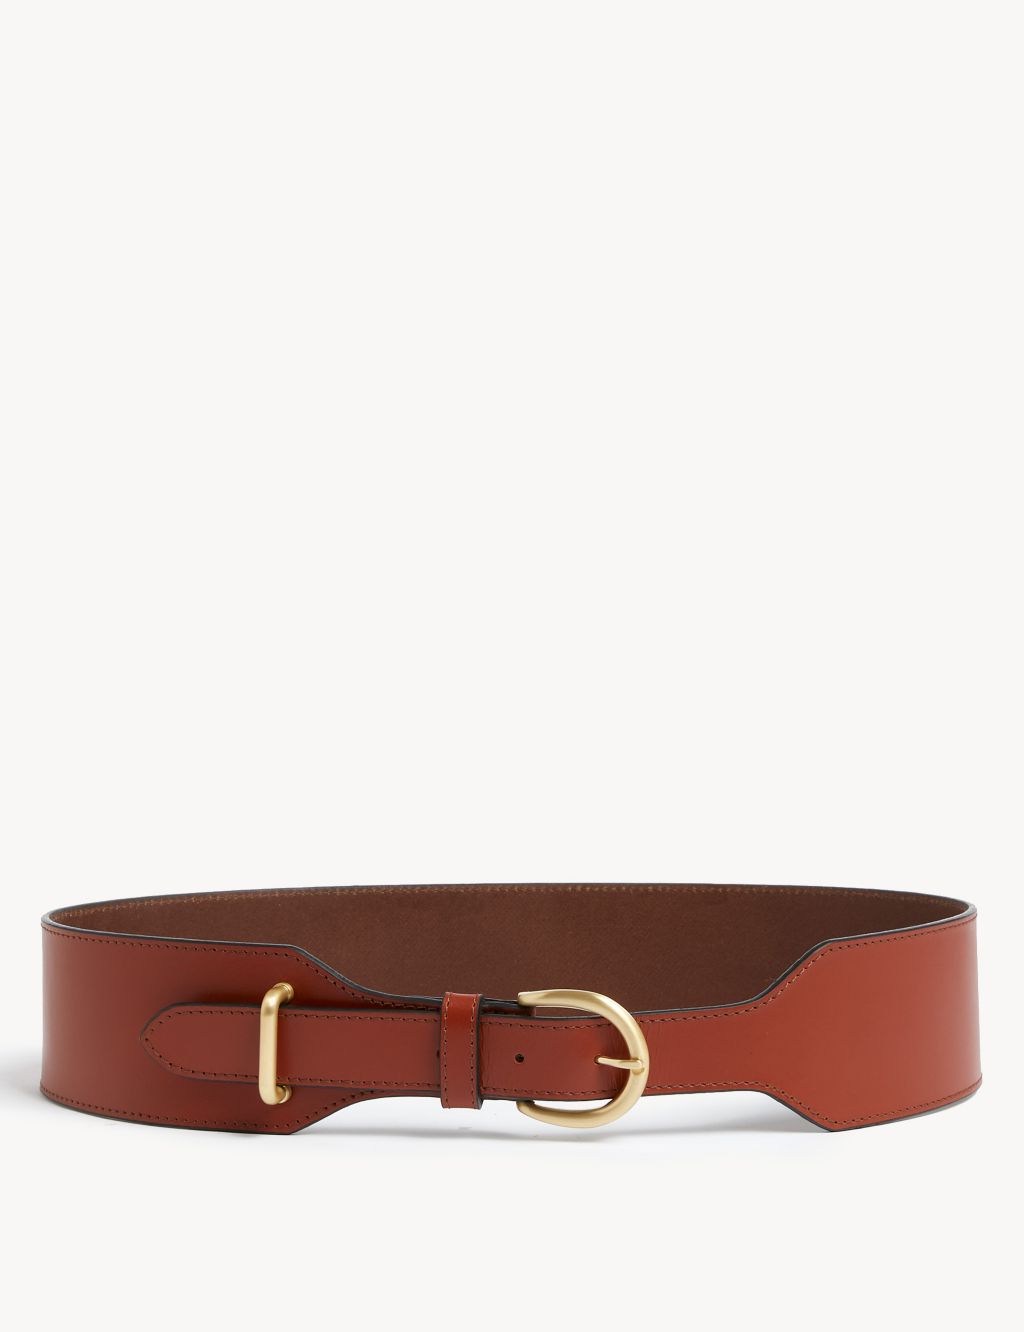 Leather Wide Waist Belt image 1